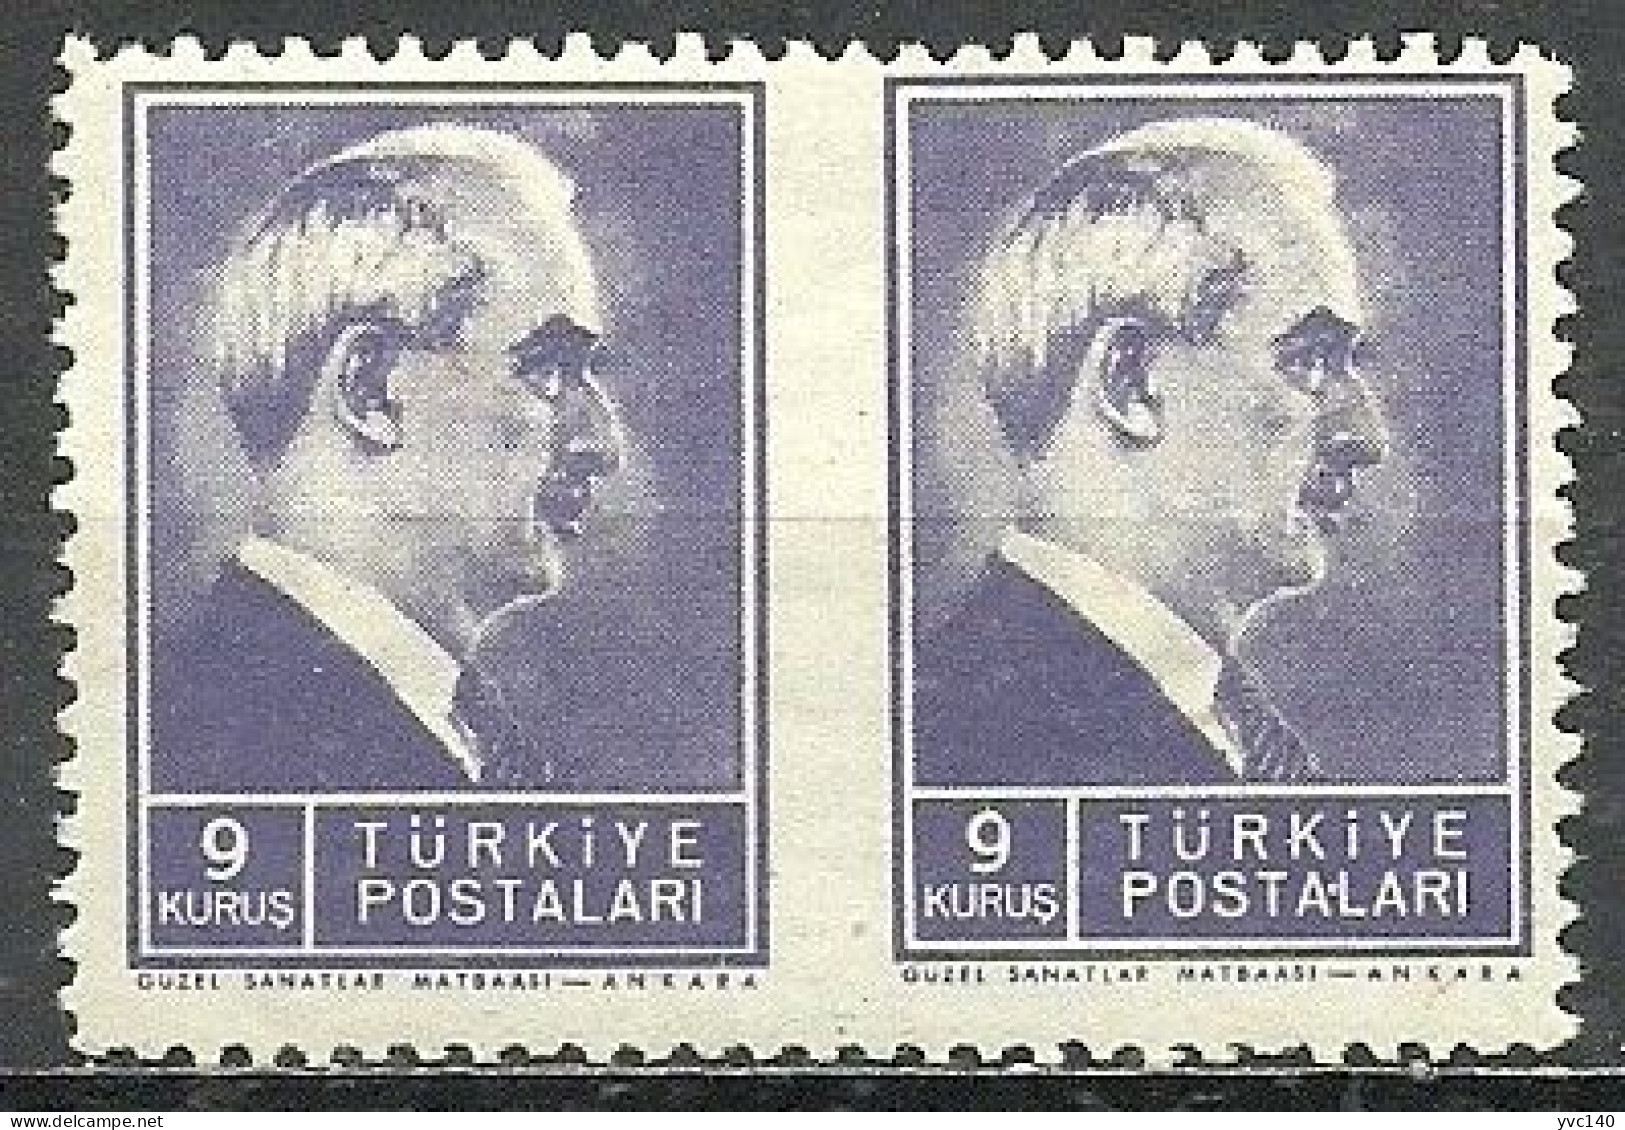 Turkey; 1944 2nd Inonu Issue 9 K. ERROR "Partially Imperf." - Unused Stamps